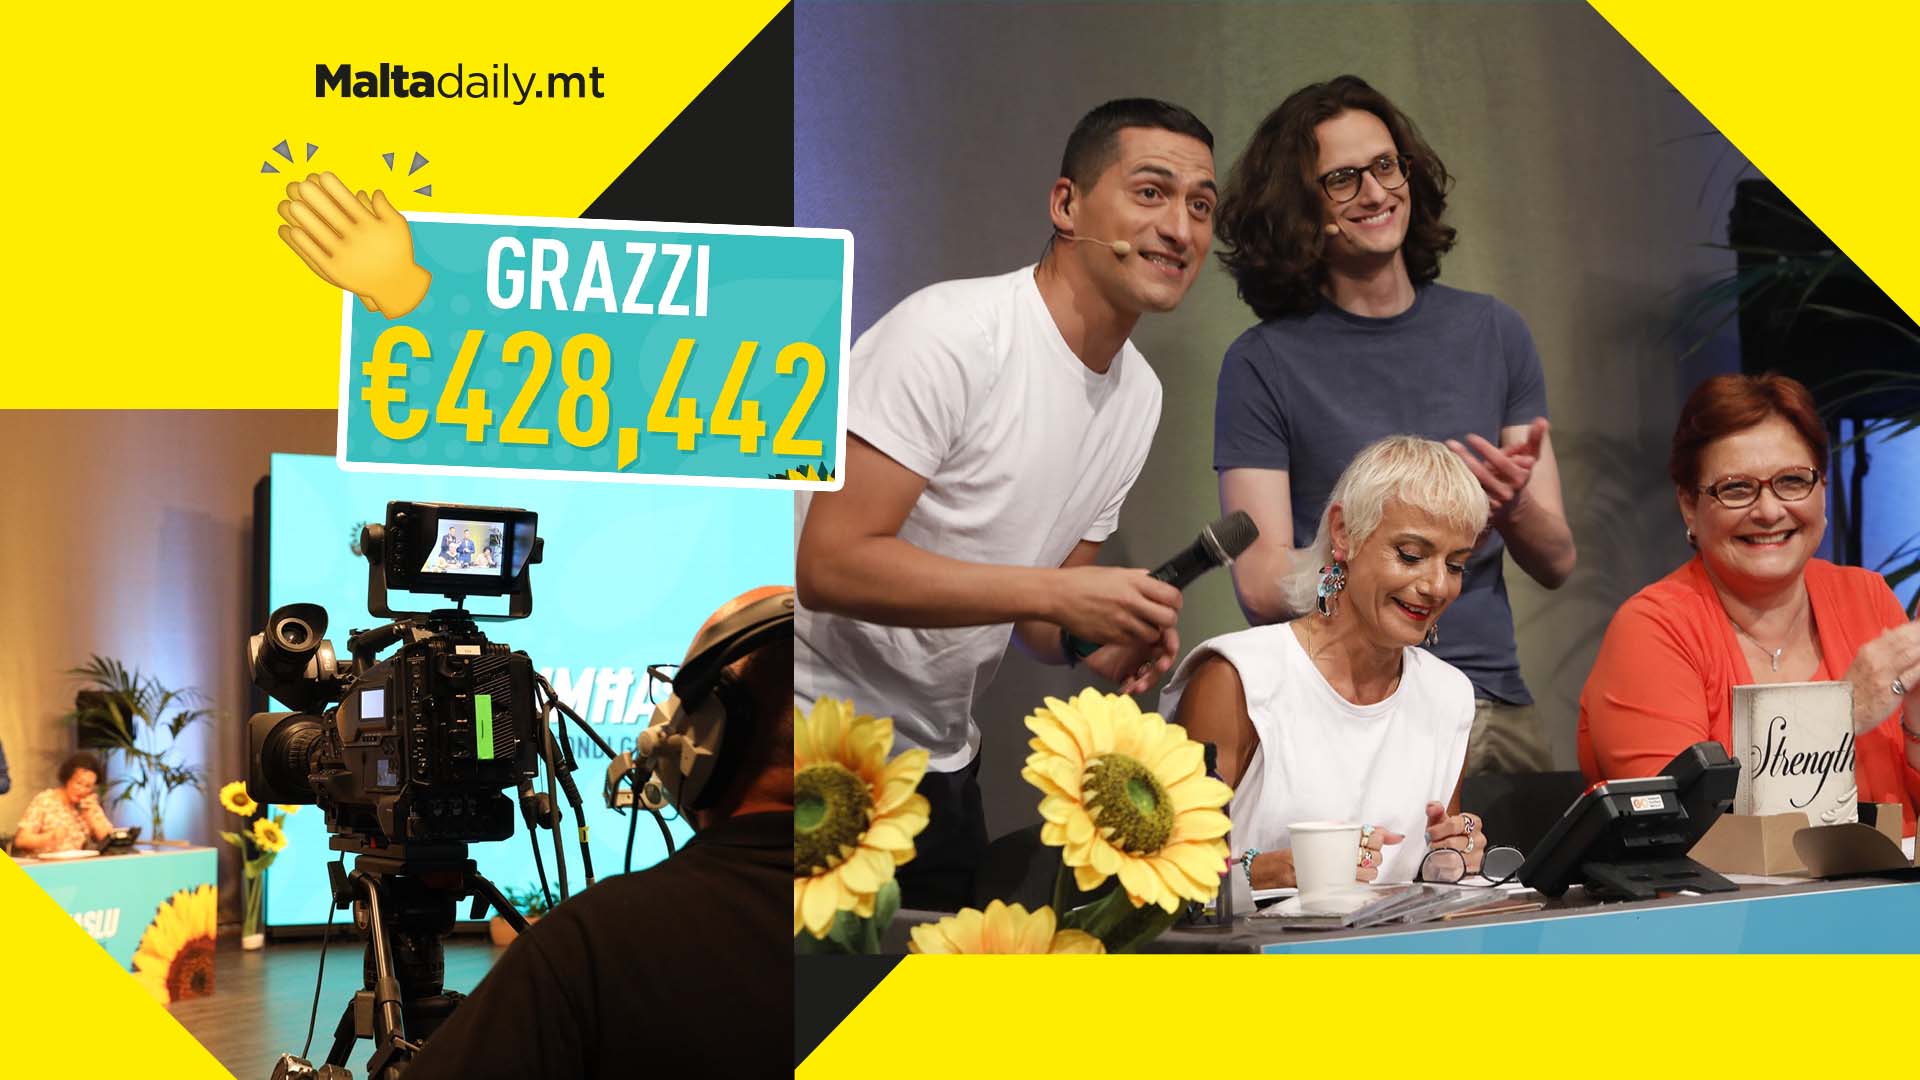 "Grazzi mill-qalb"; €428,442 collected in Hospice Malta fundraising marathon